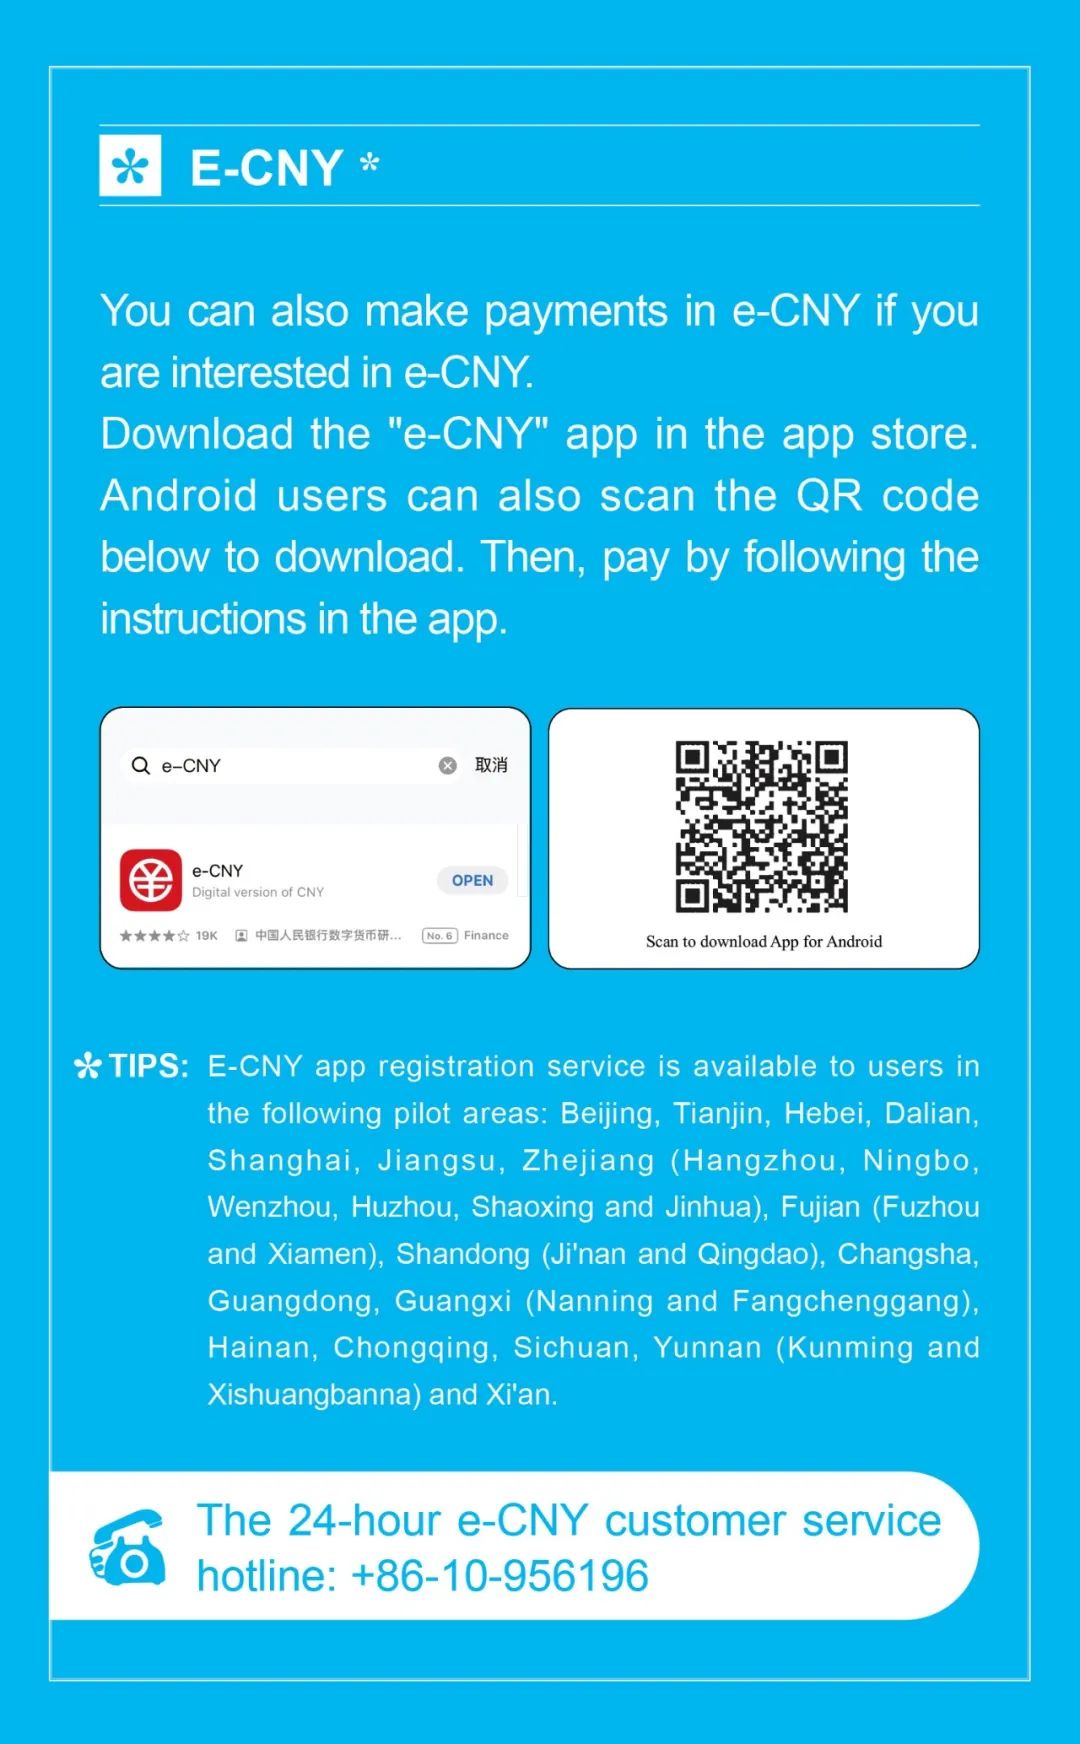 外籍来华人员支付指南 Guide to Payment Services in China 丨贝斯哲